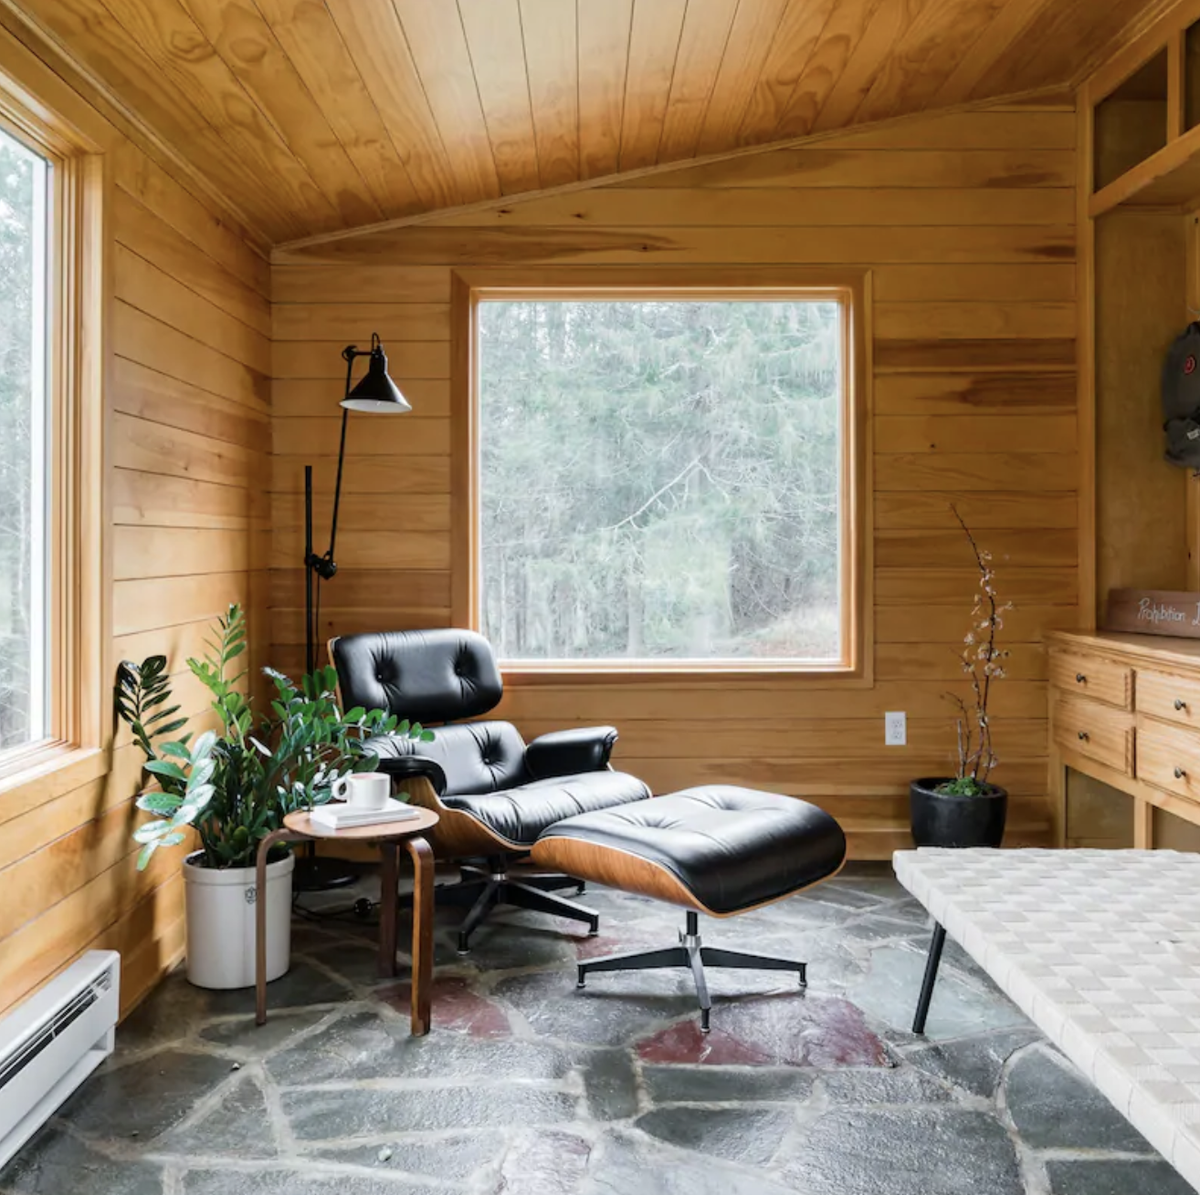 32 Amazing Examples of Cabin Decor  Cabin interior design, Log cabin decor,  Log cabin interior